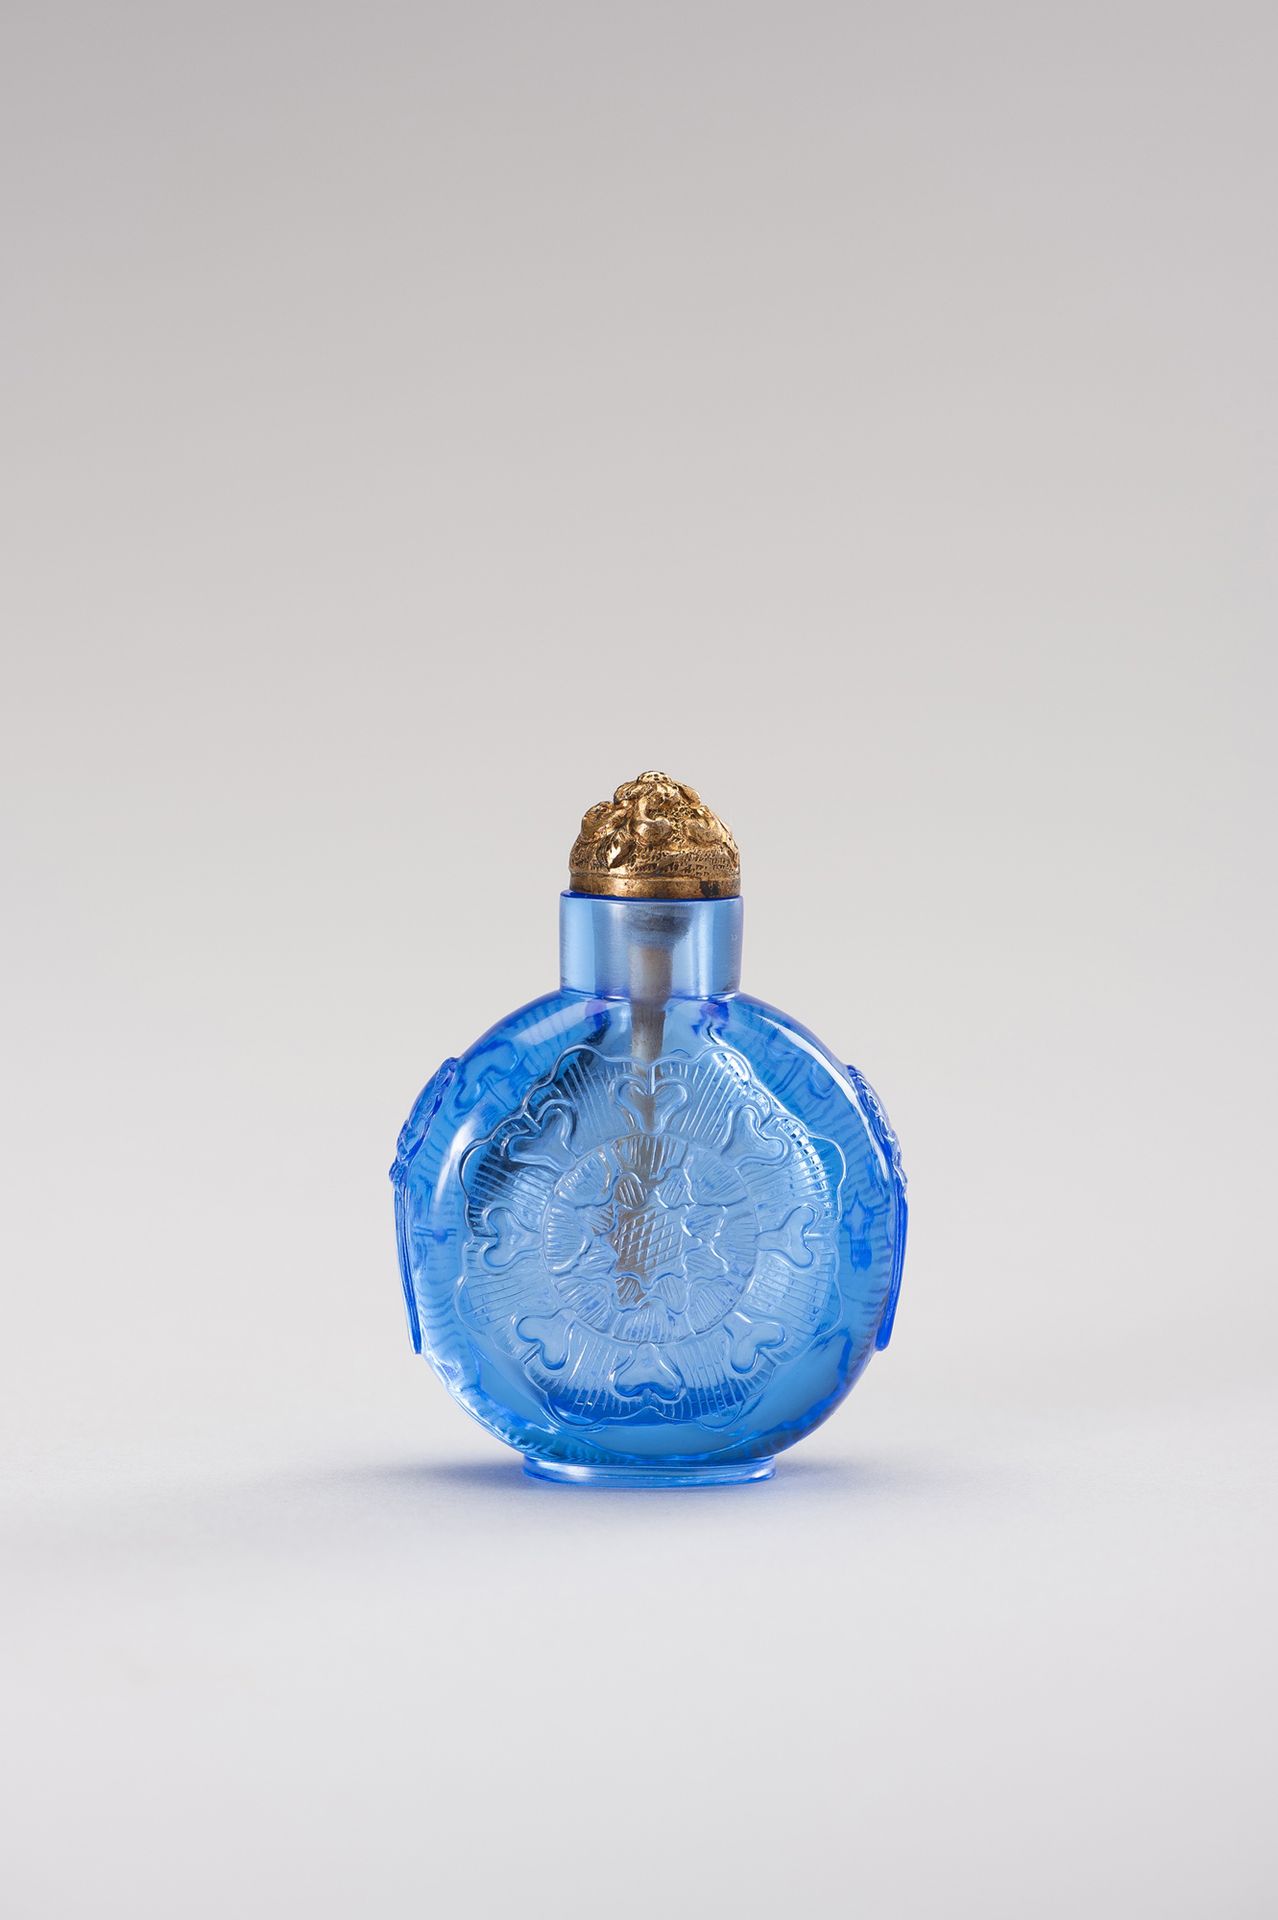 A TRANSPARENT BLUE GLASS SNUFF BOTTLE BOTELLA DE VIDRIO AZUL TRANSPARENTE
China,&hellip;